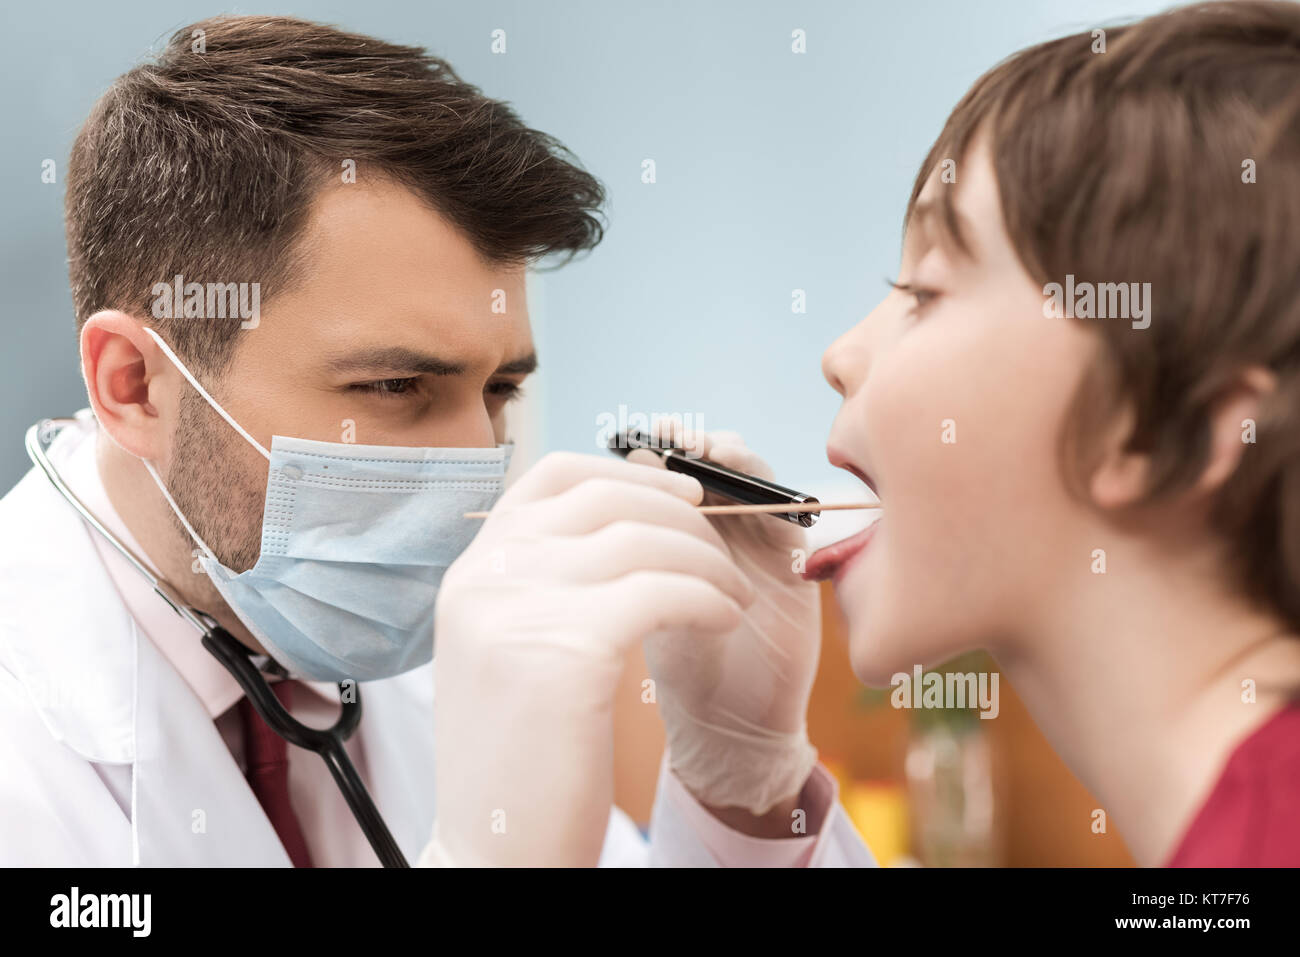 Лечение горла врачи